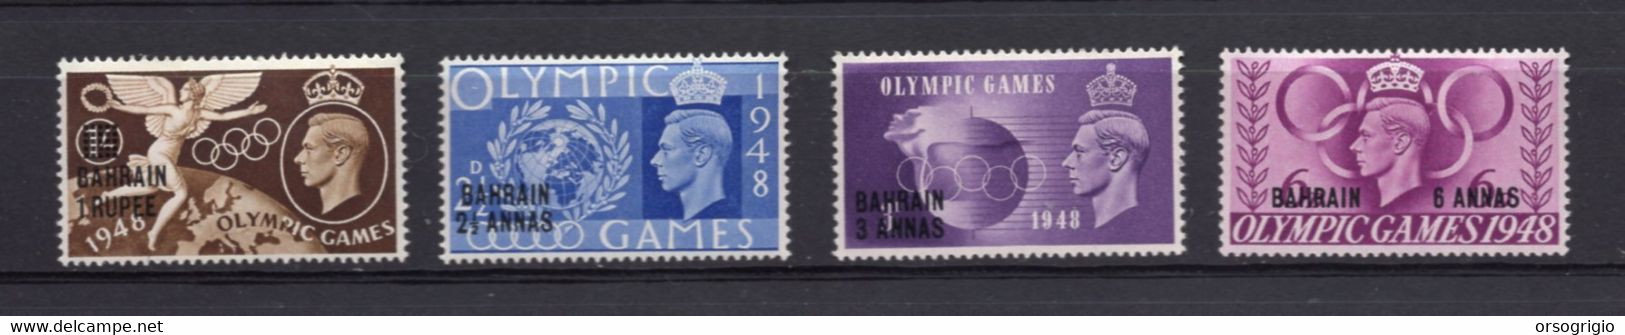 GRAN BRETAGNA - OLYMPIC GAMES - BAHRAIN - Sommer 1948: London